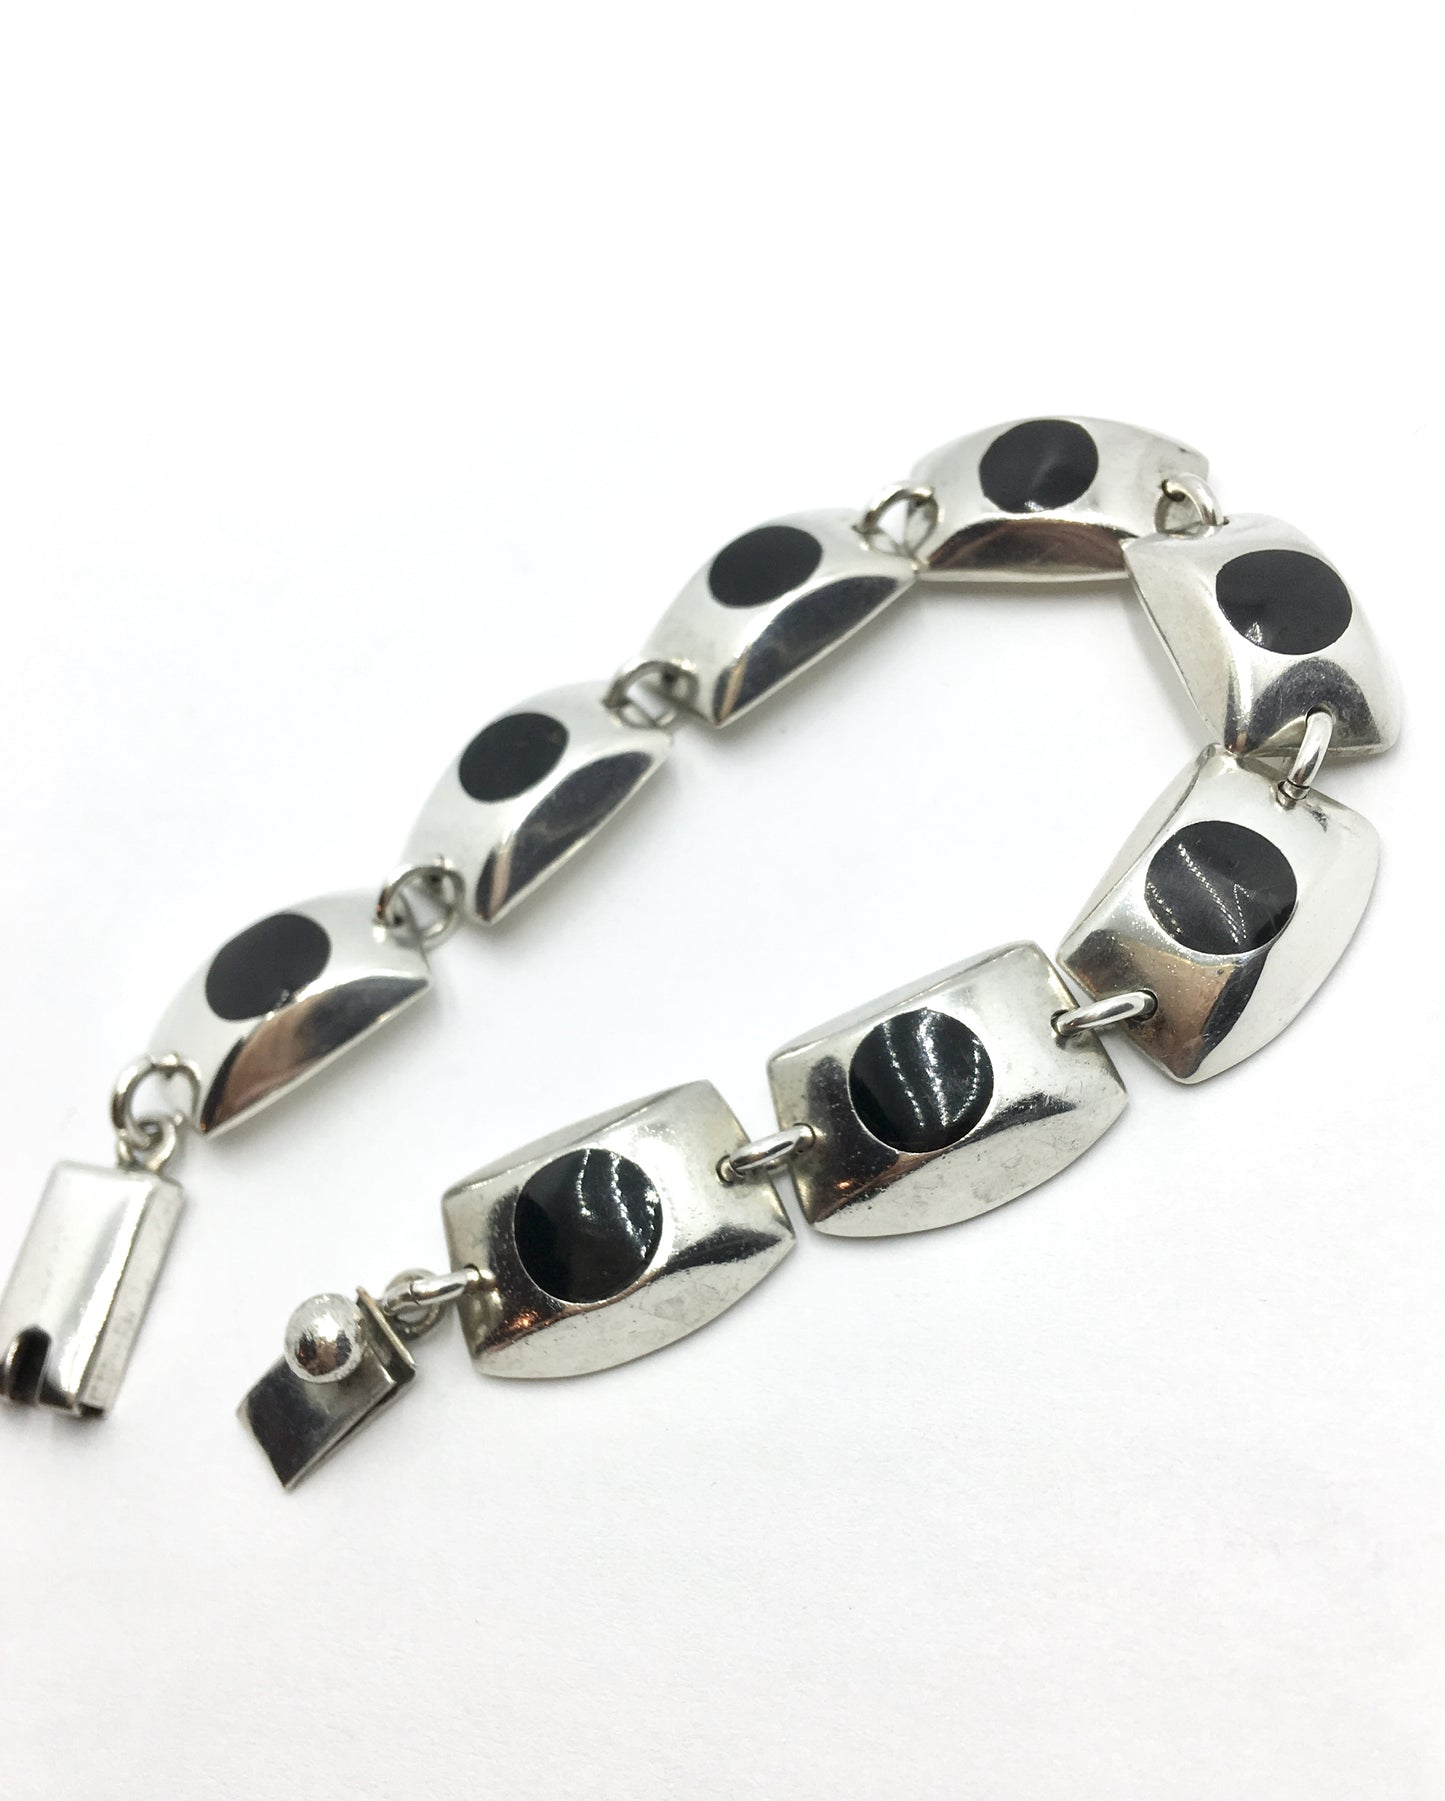 Vintage Jewelry | Sterling Silver Black Unique Block Link Chain Bracelet 7.75"